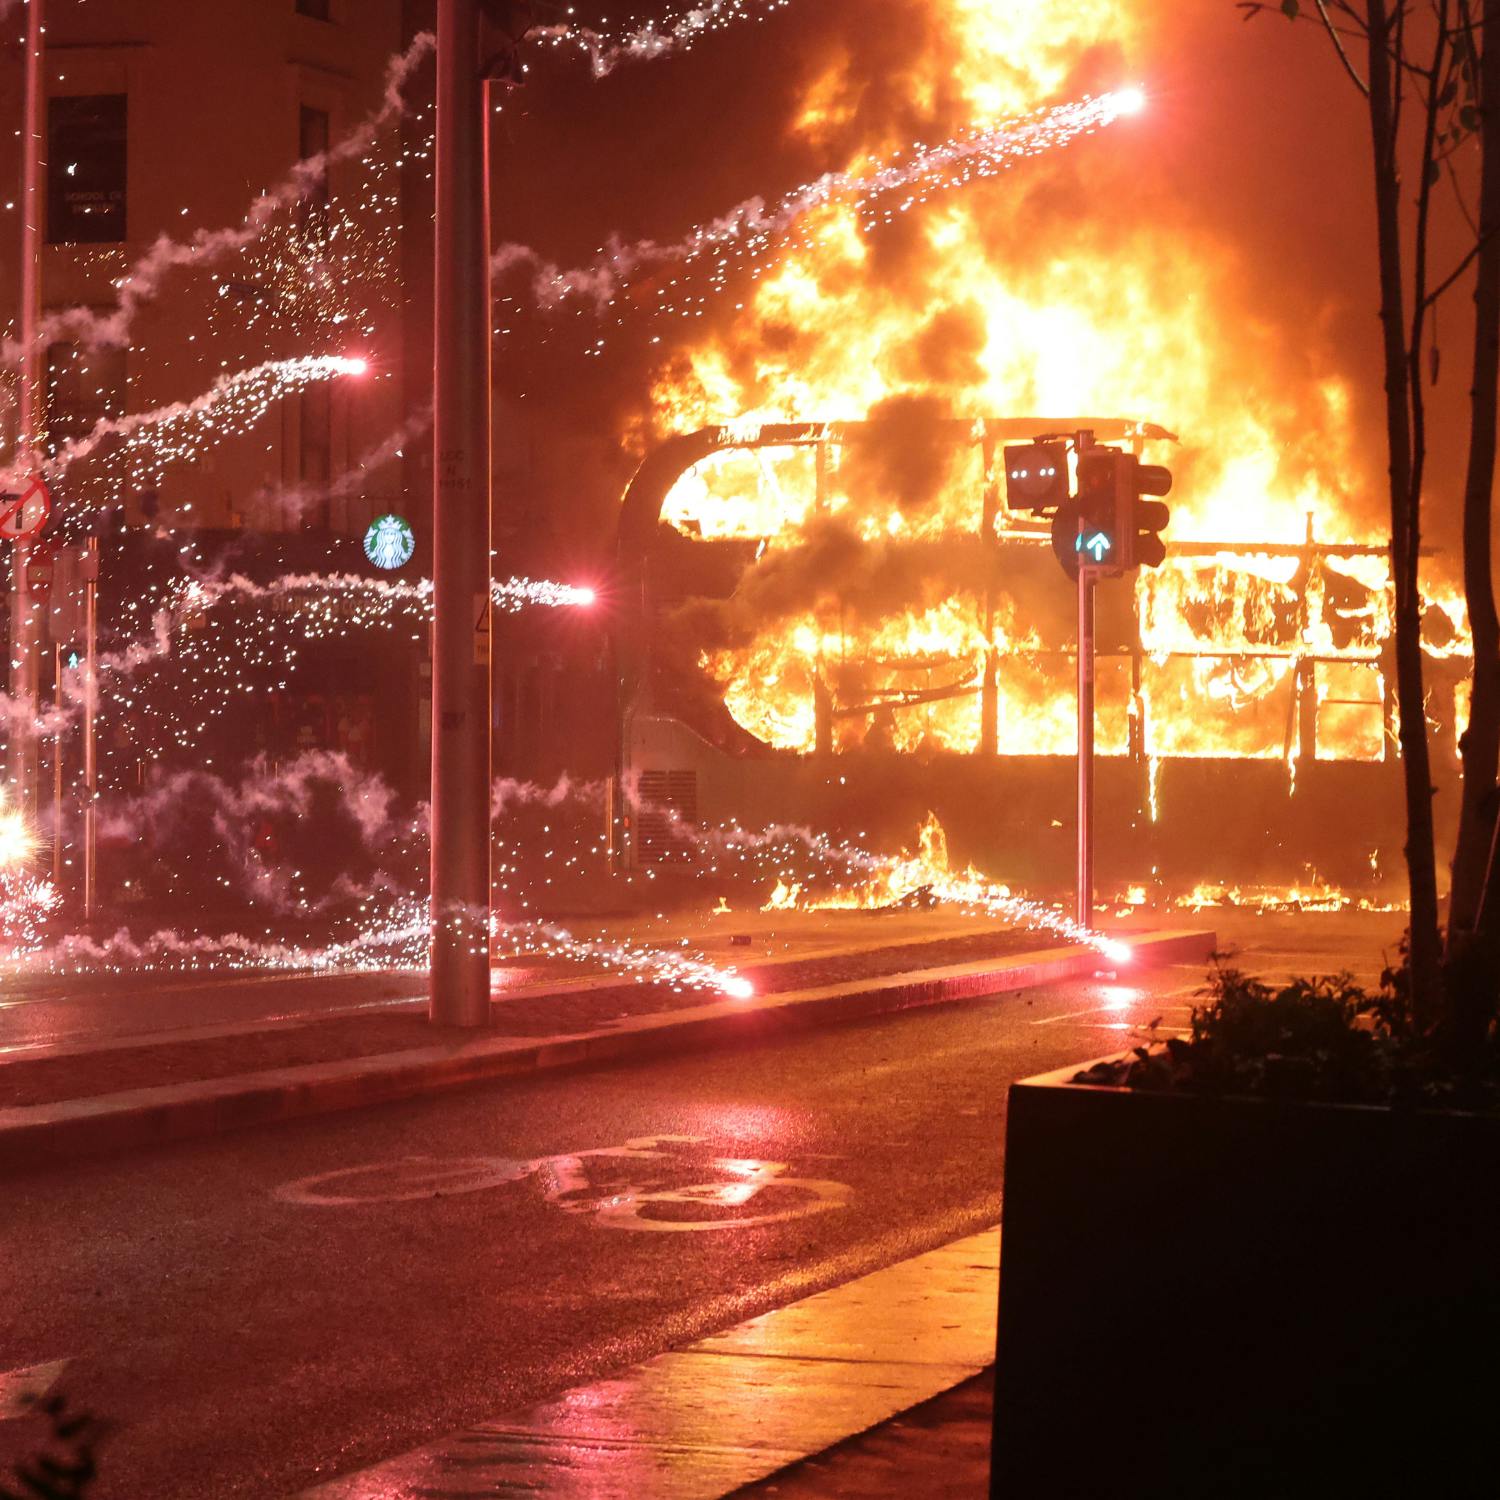 A bus engulfed in flames in Dublin last night.